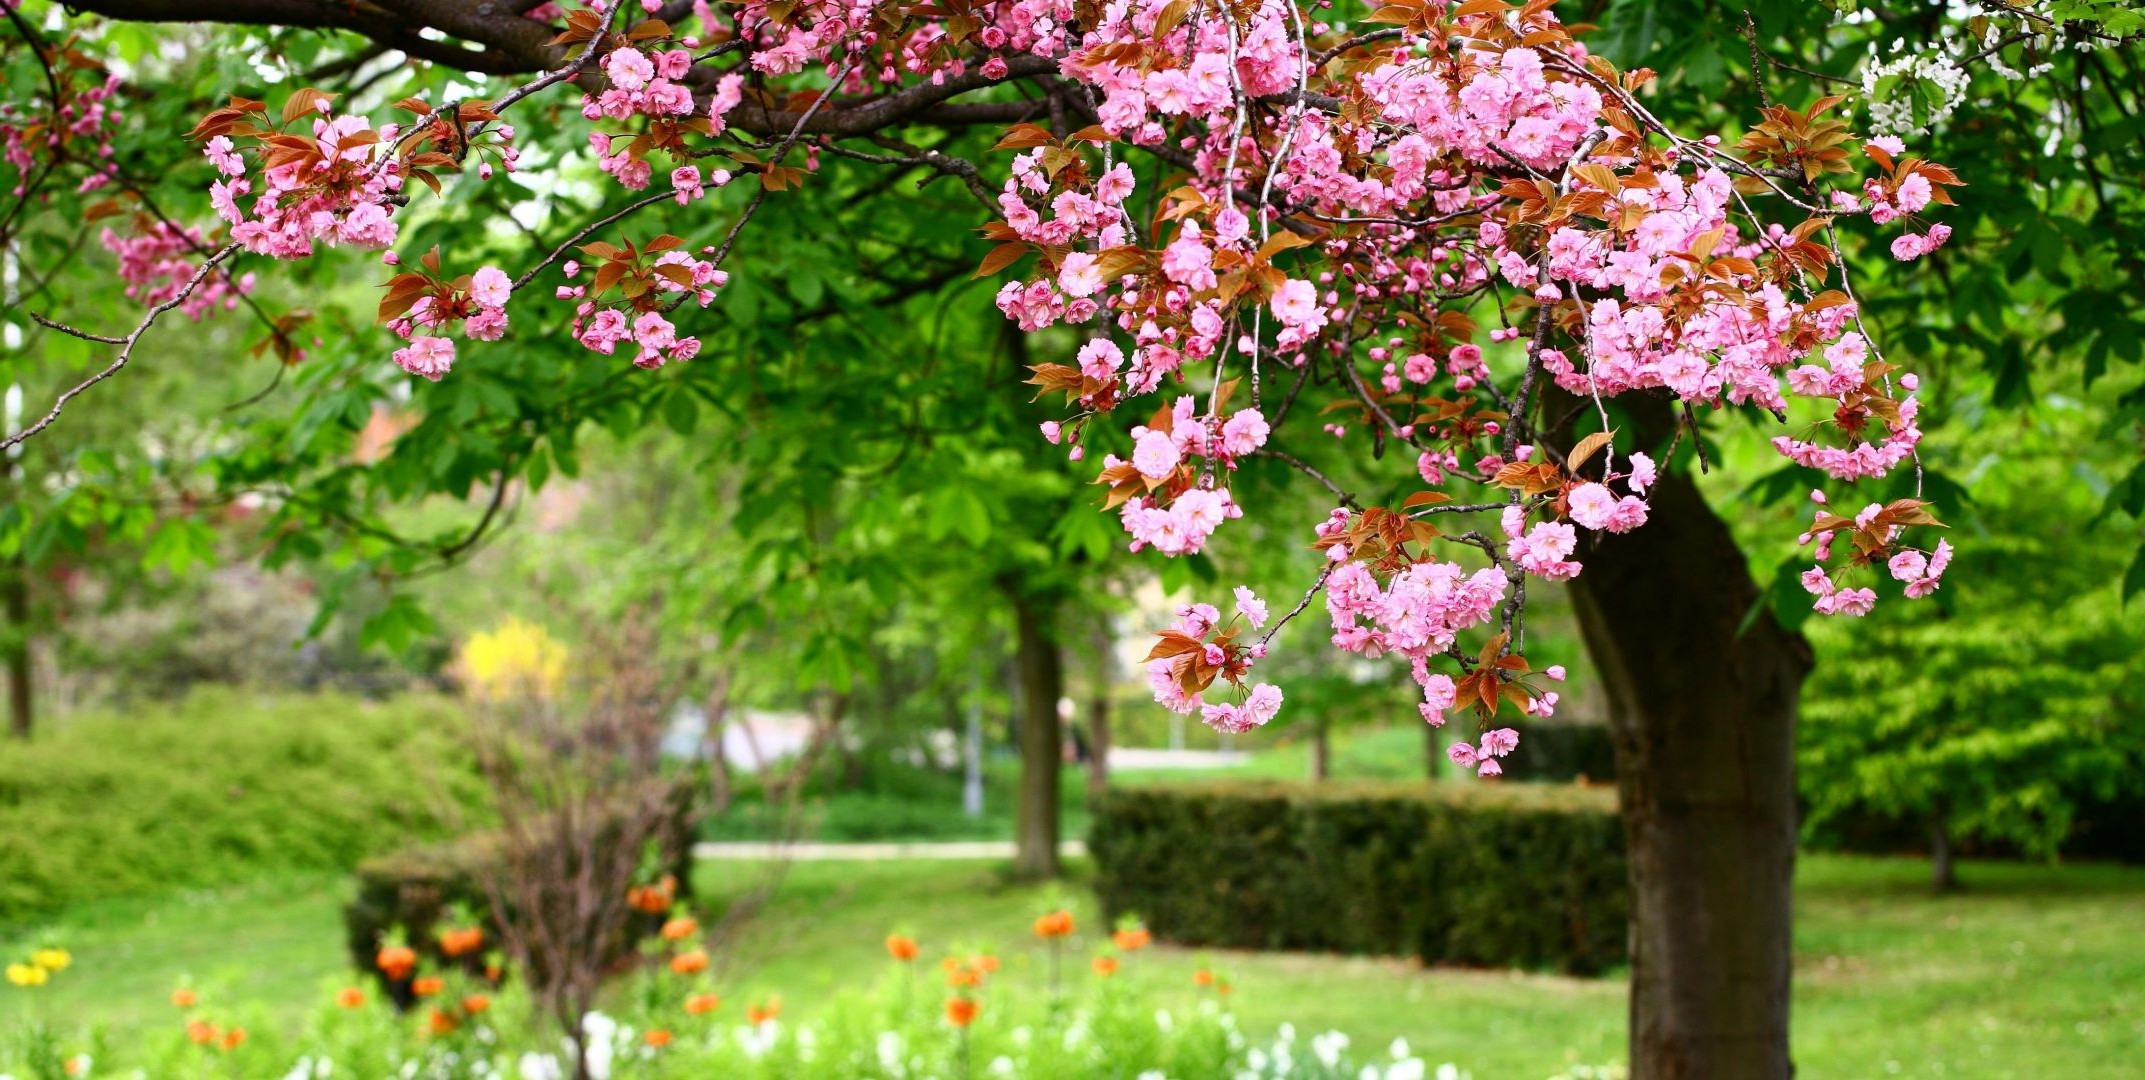 весна цветок сад дерево природа флора блюминг лист рост лето филиал вишня сезон лепесток парк цветочные ботанический кустарник на открытом воздухе весна